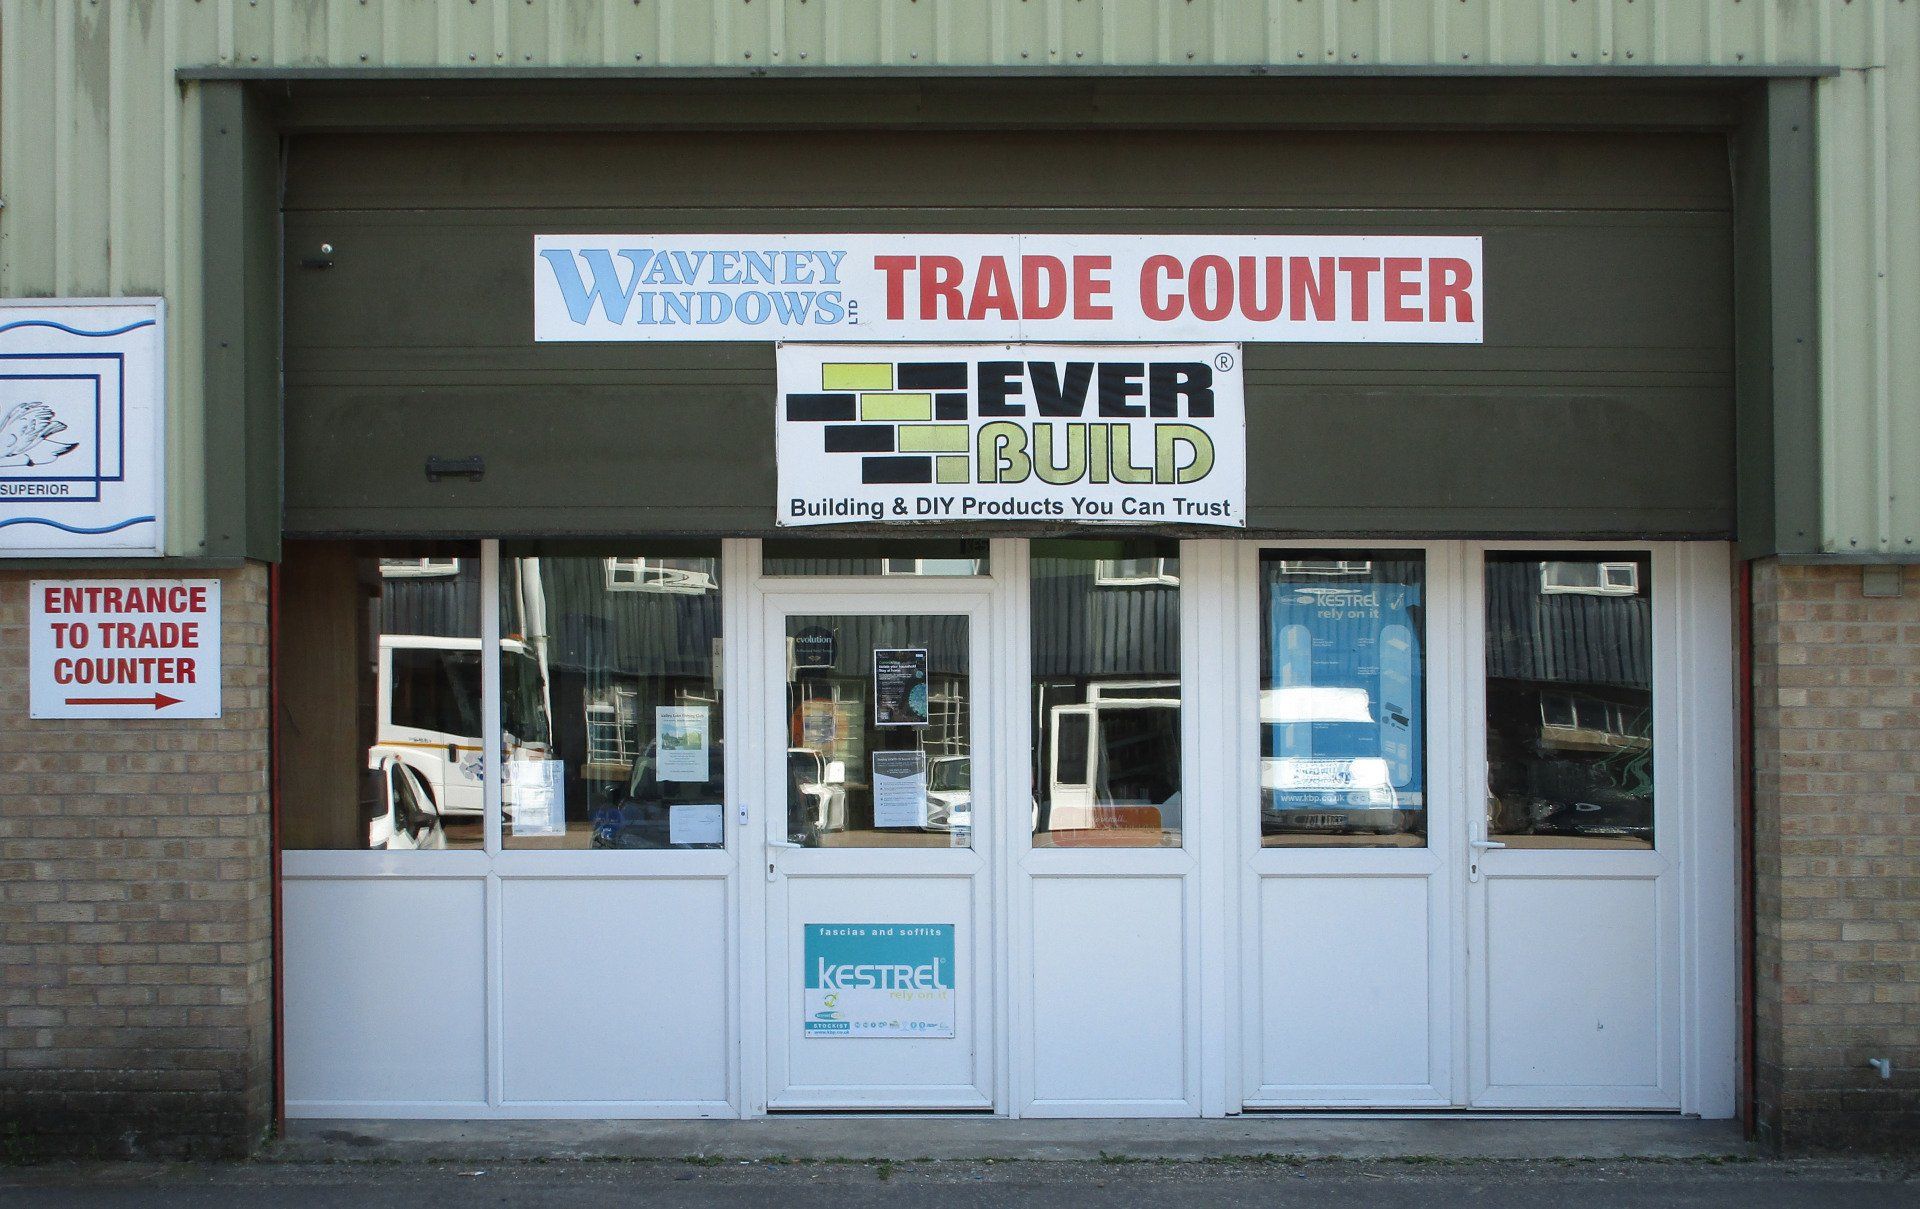 Waveney Windows trade counter